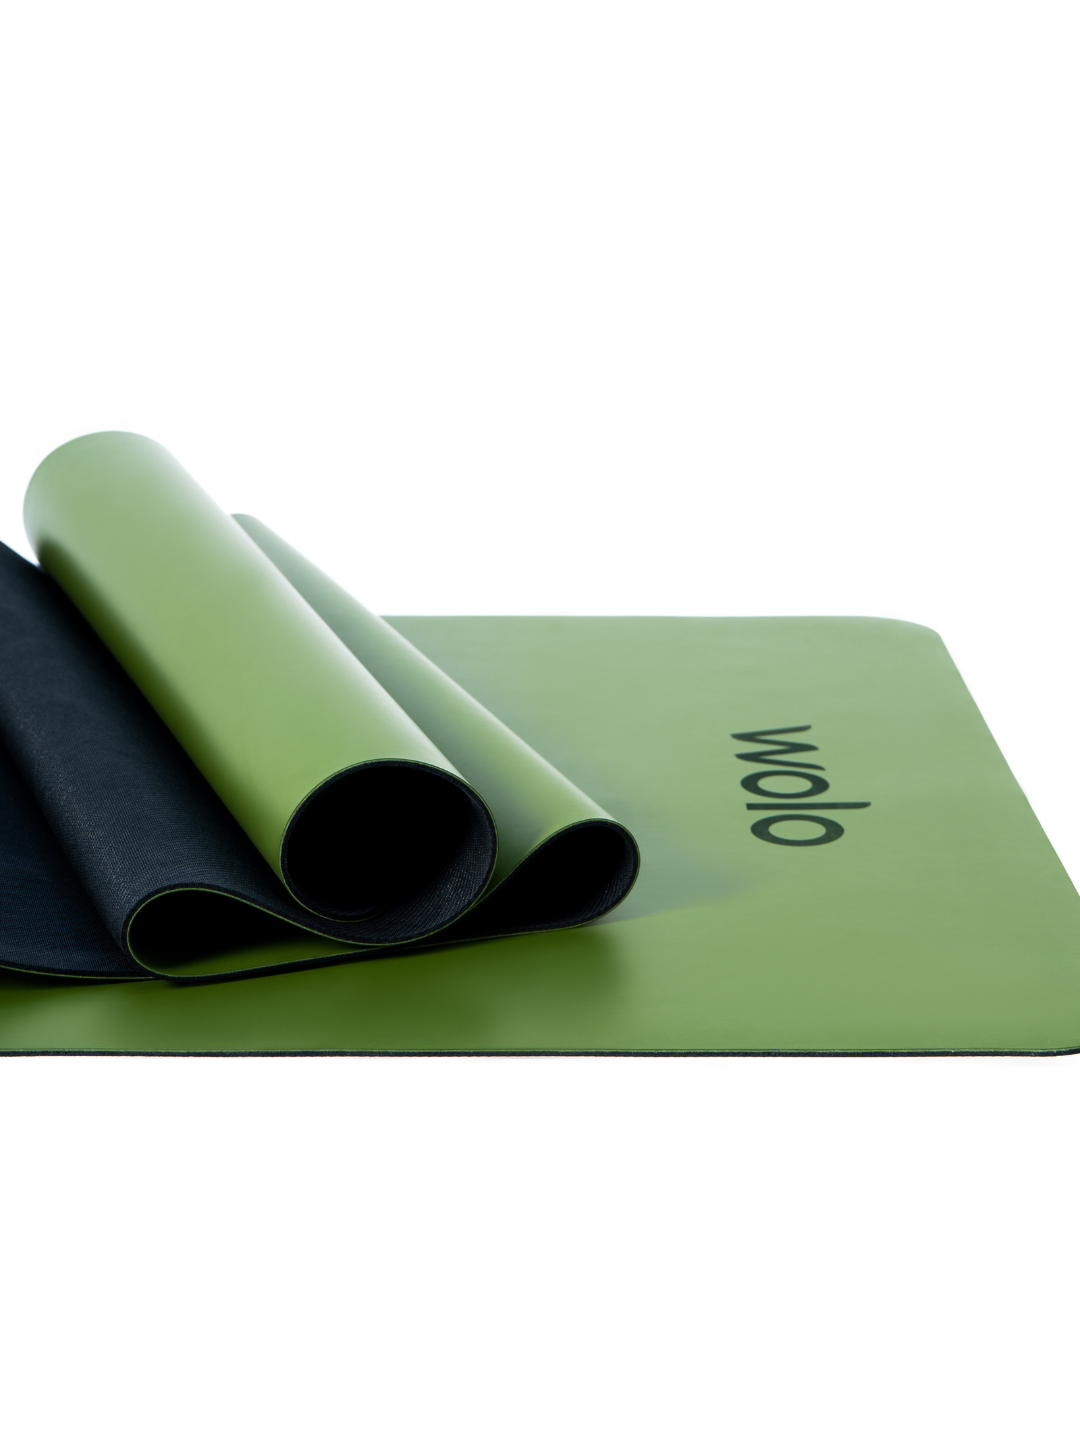 Close-up view of a Sage green yoga mat